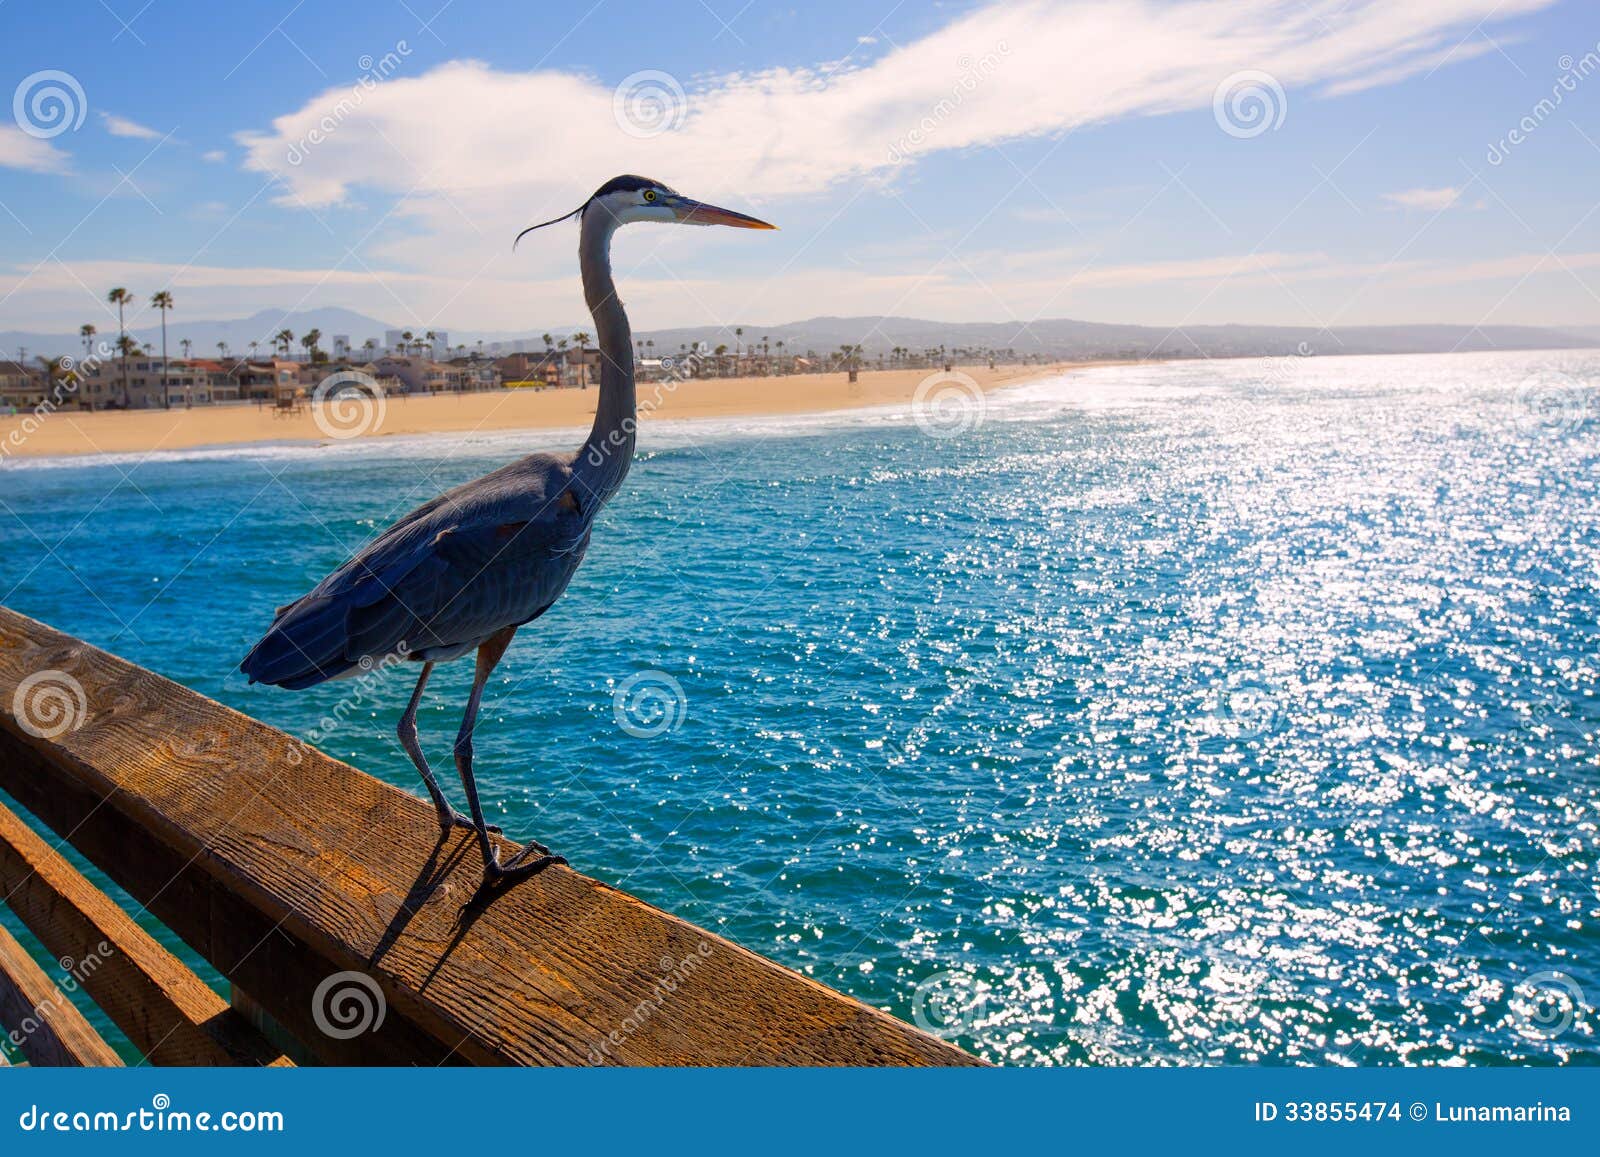 blue heron ardea cinerea in newport pier california